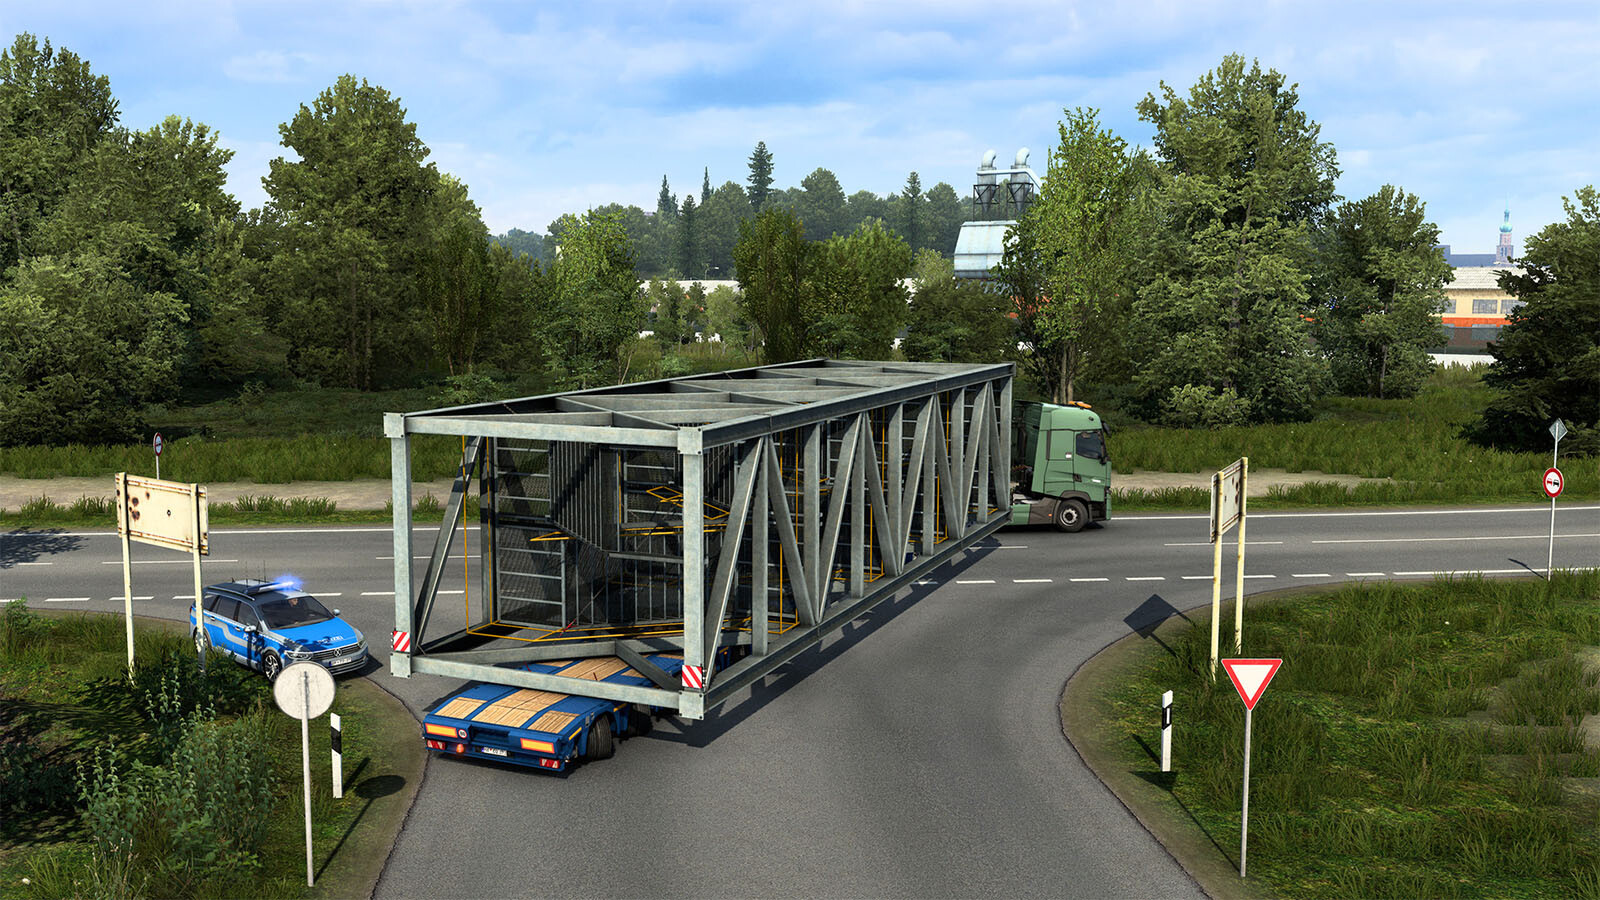 Euro Truck Simulator 2 - Special Transport Steam Key for PC, Mac